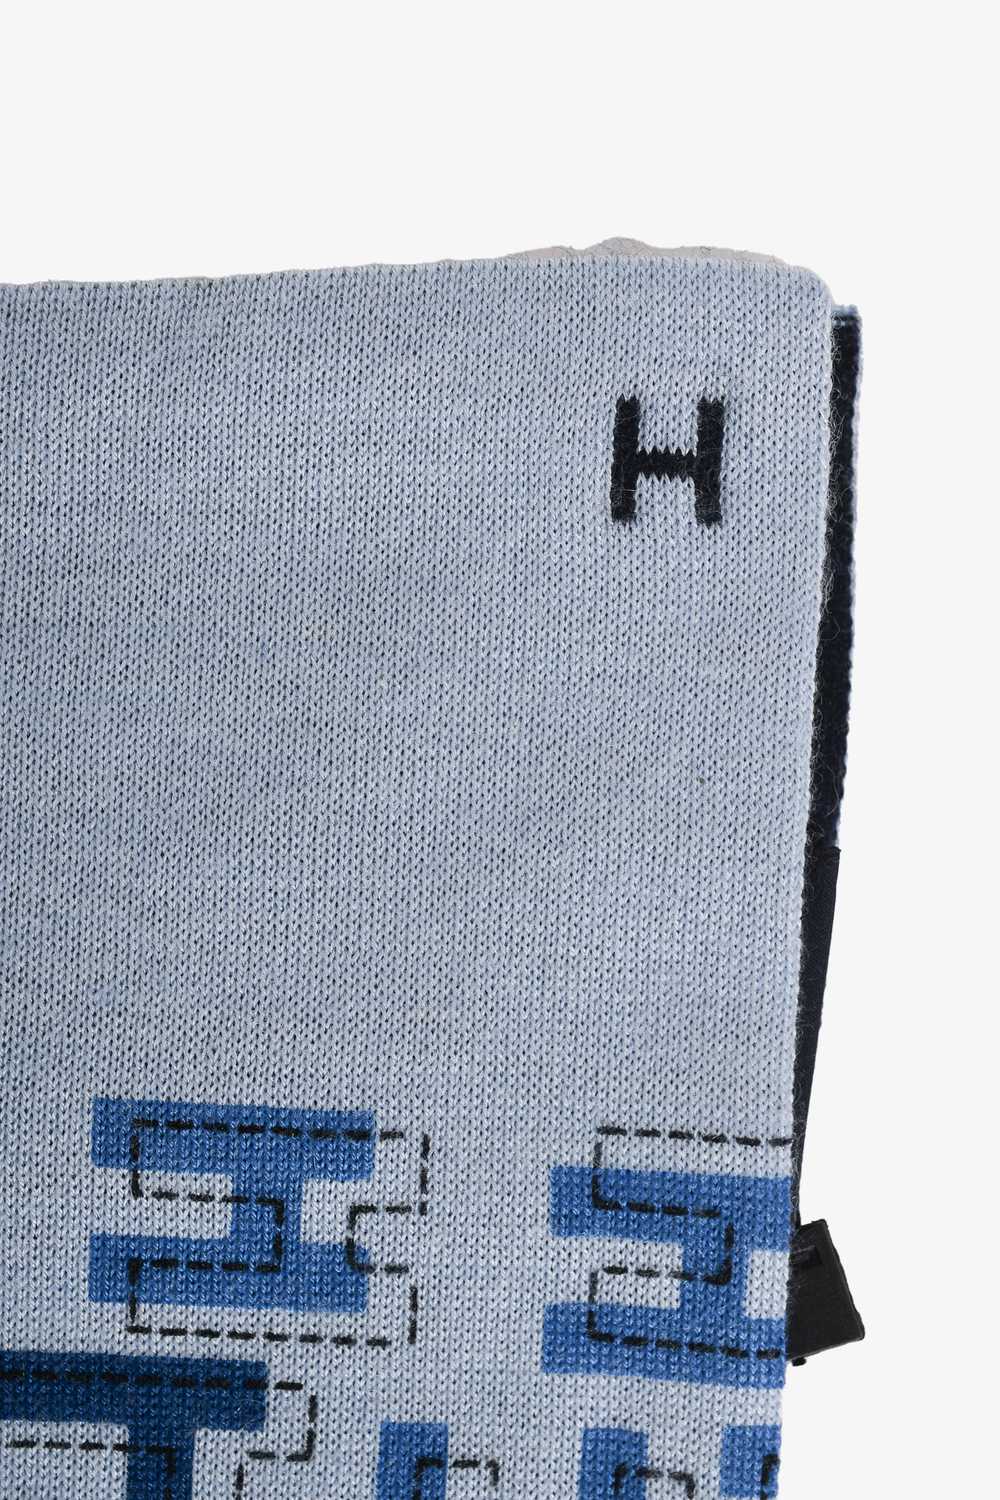 Hermès Blue Cashmere/Silk 'H' Rectangle Scarf - image 3